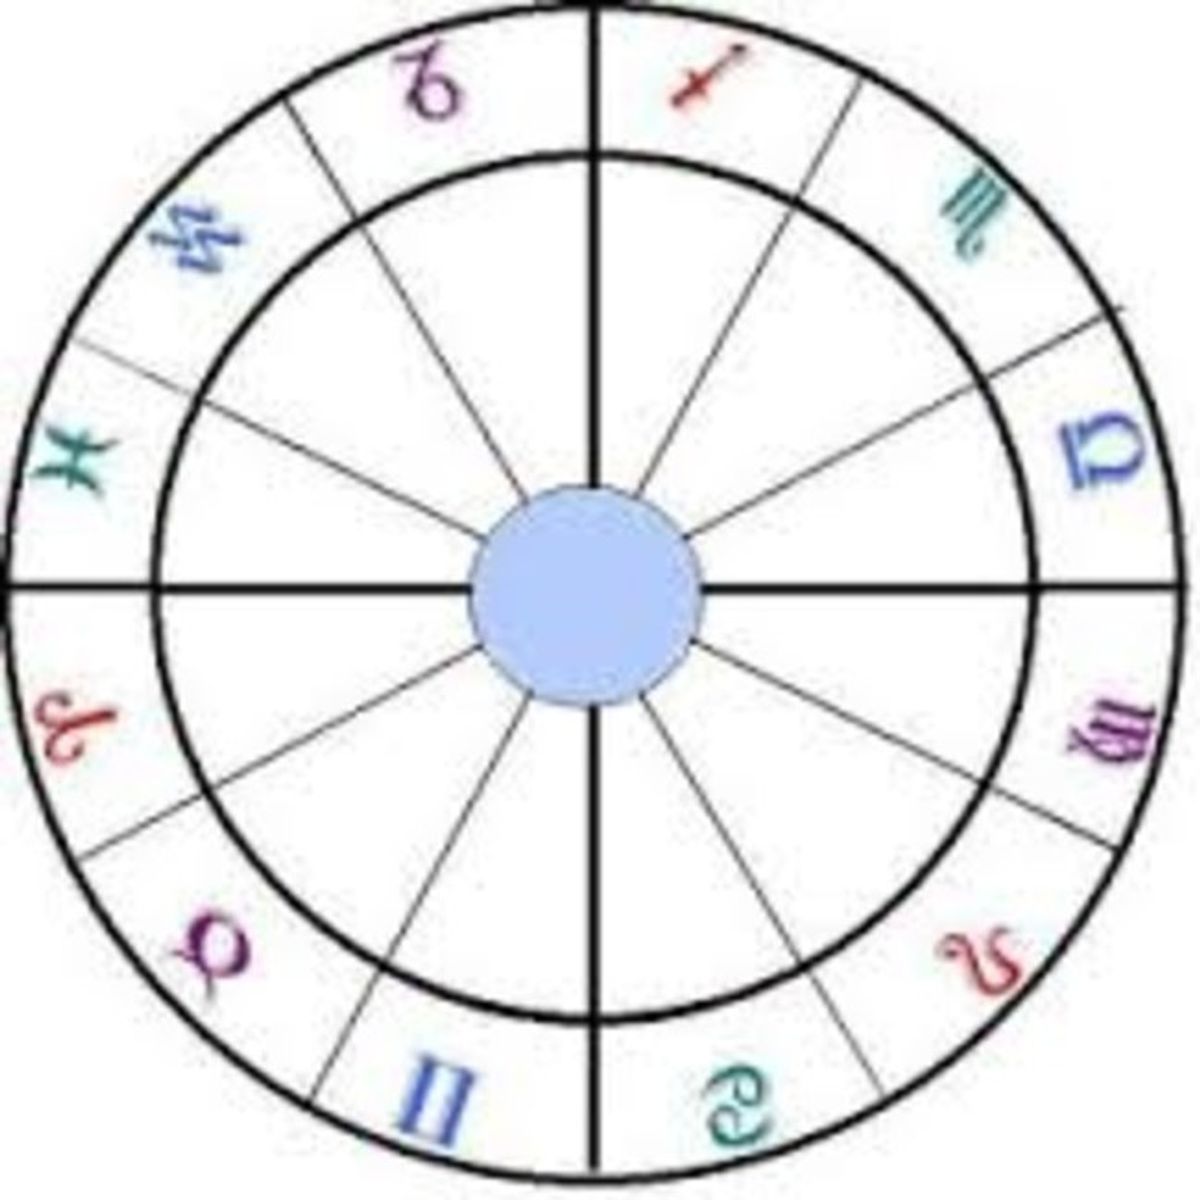 Astrology Basics Part 3: The Houses